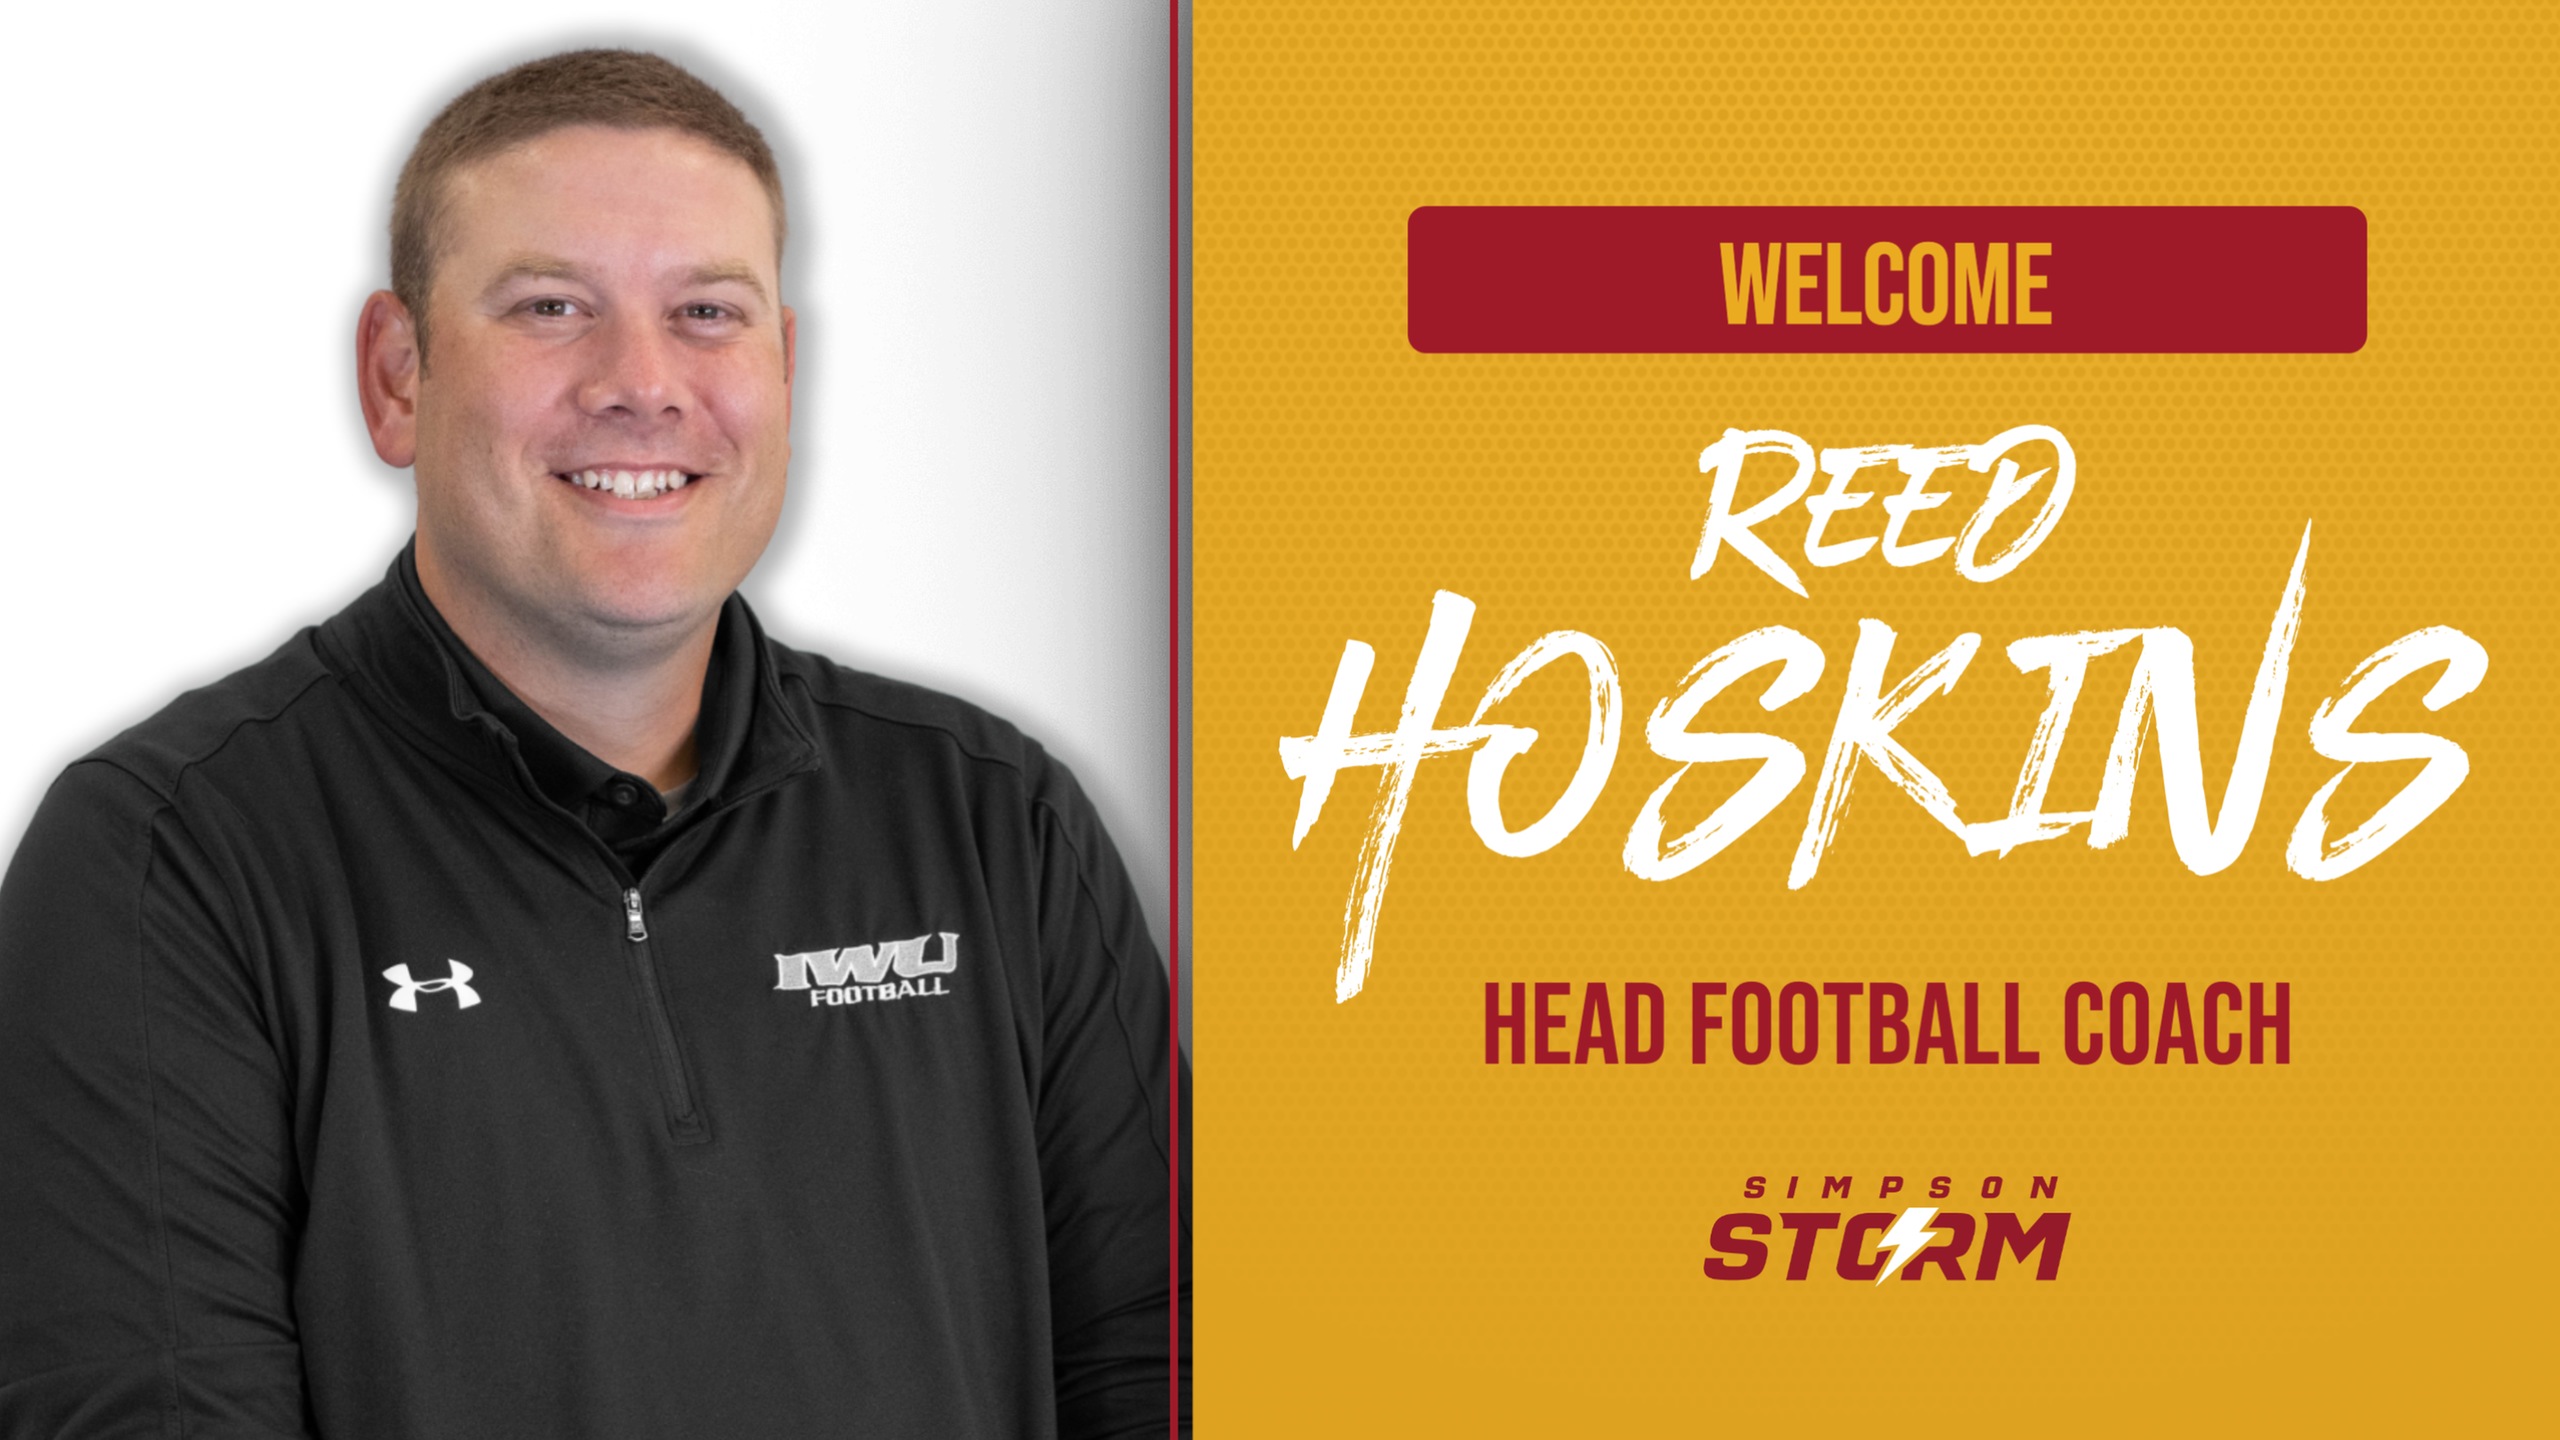 Reed Hoskins hired as head football coach